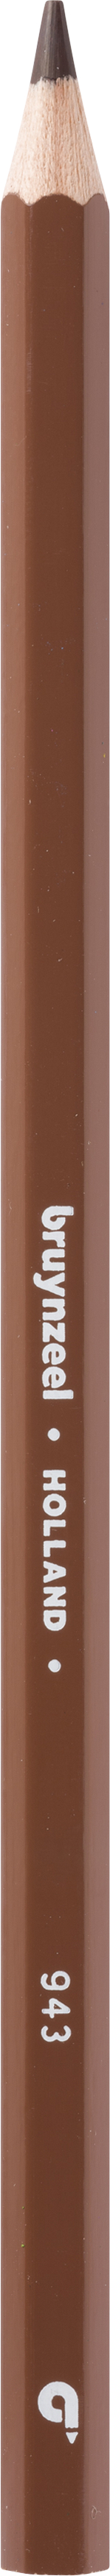 BRUYNZEEL Crayon de couleur Super 3.3mm 60516943 marron